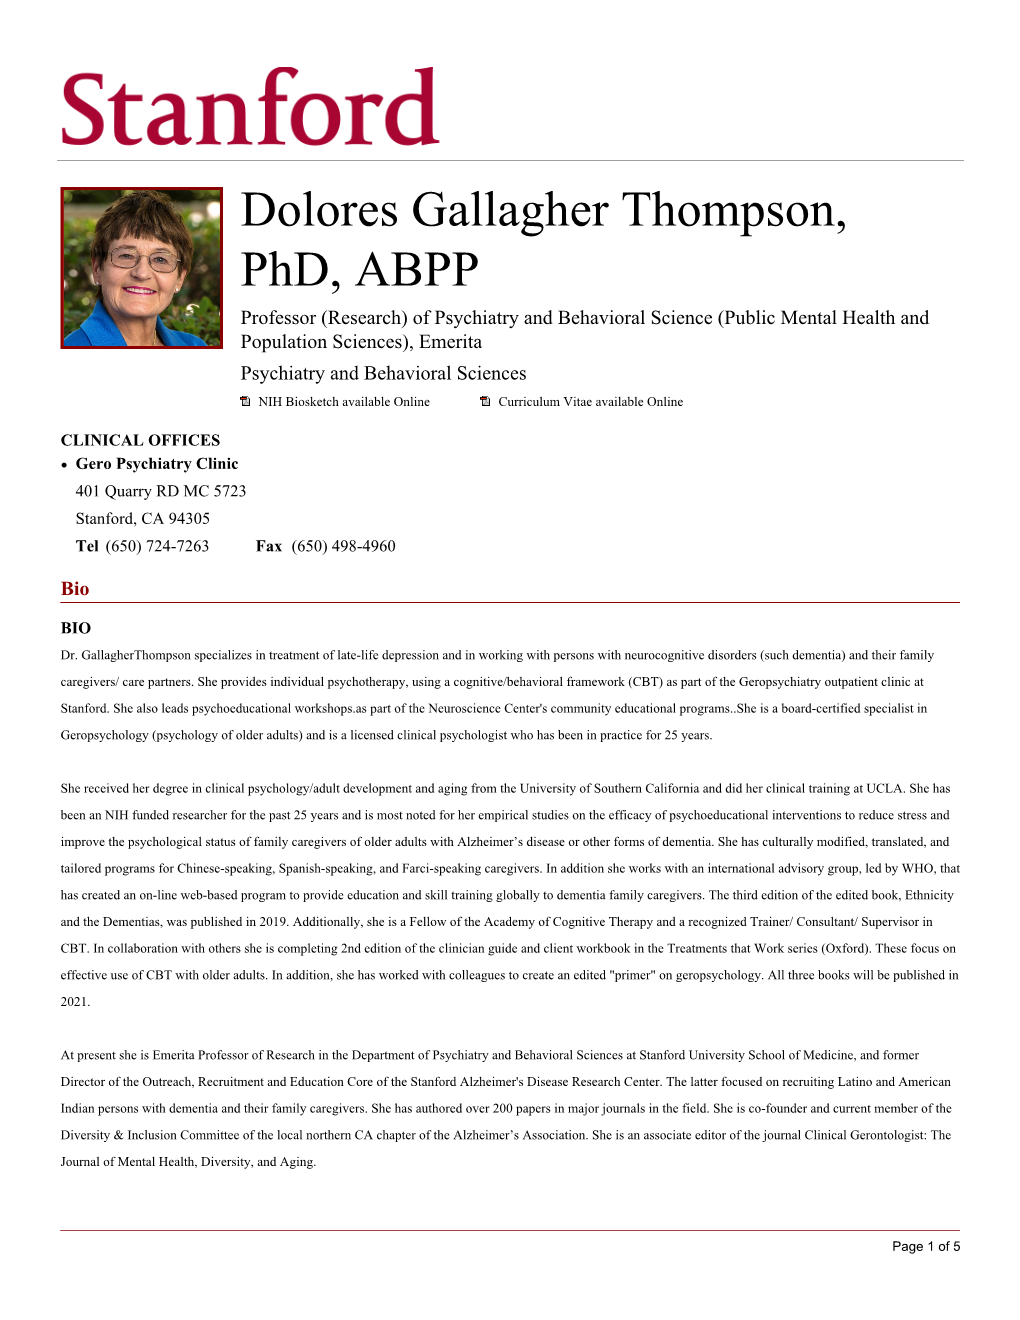 Dolores Gallagher Thompson, Phd, ABPP